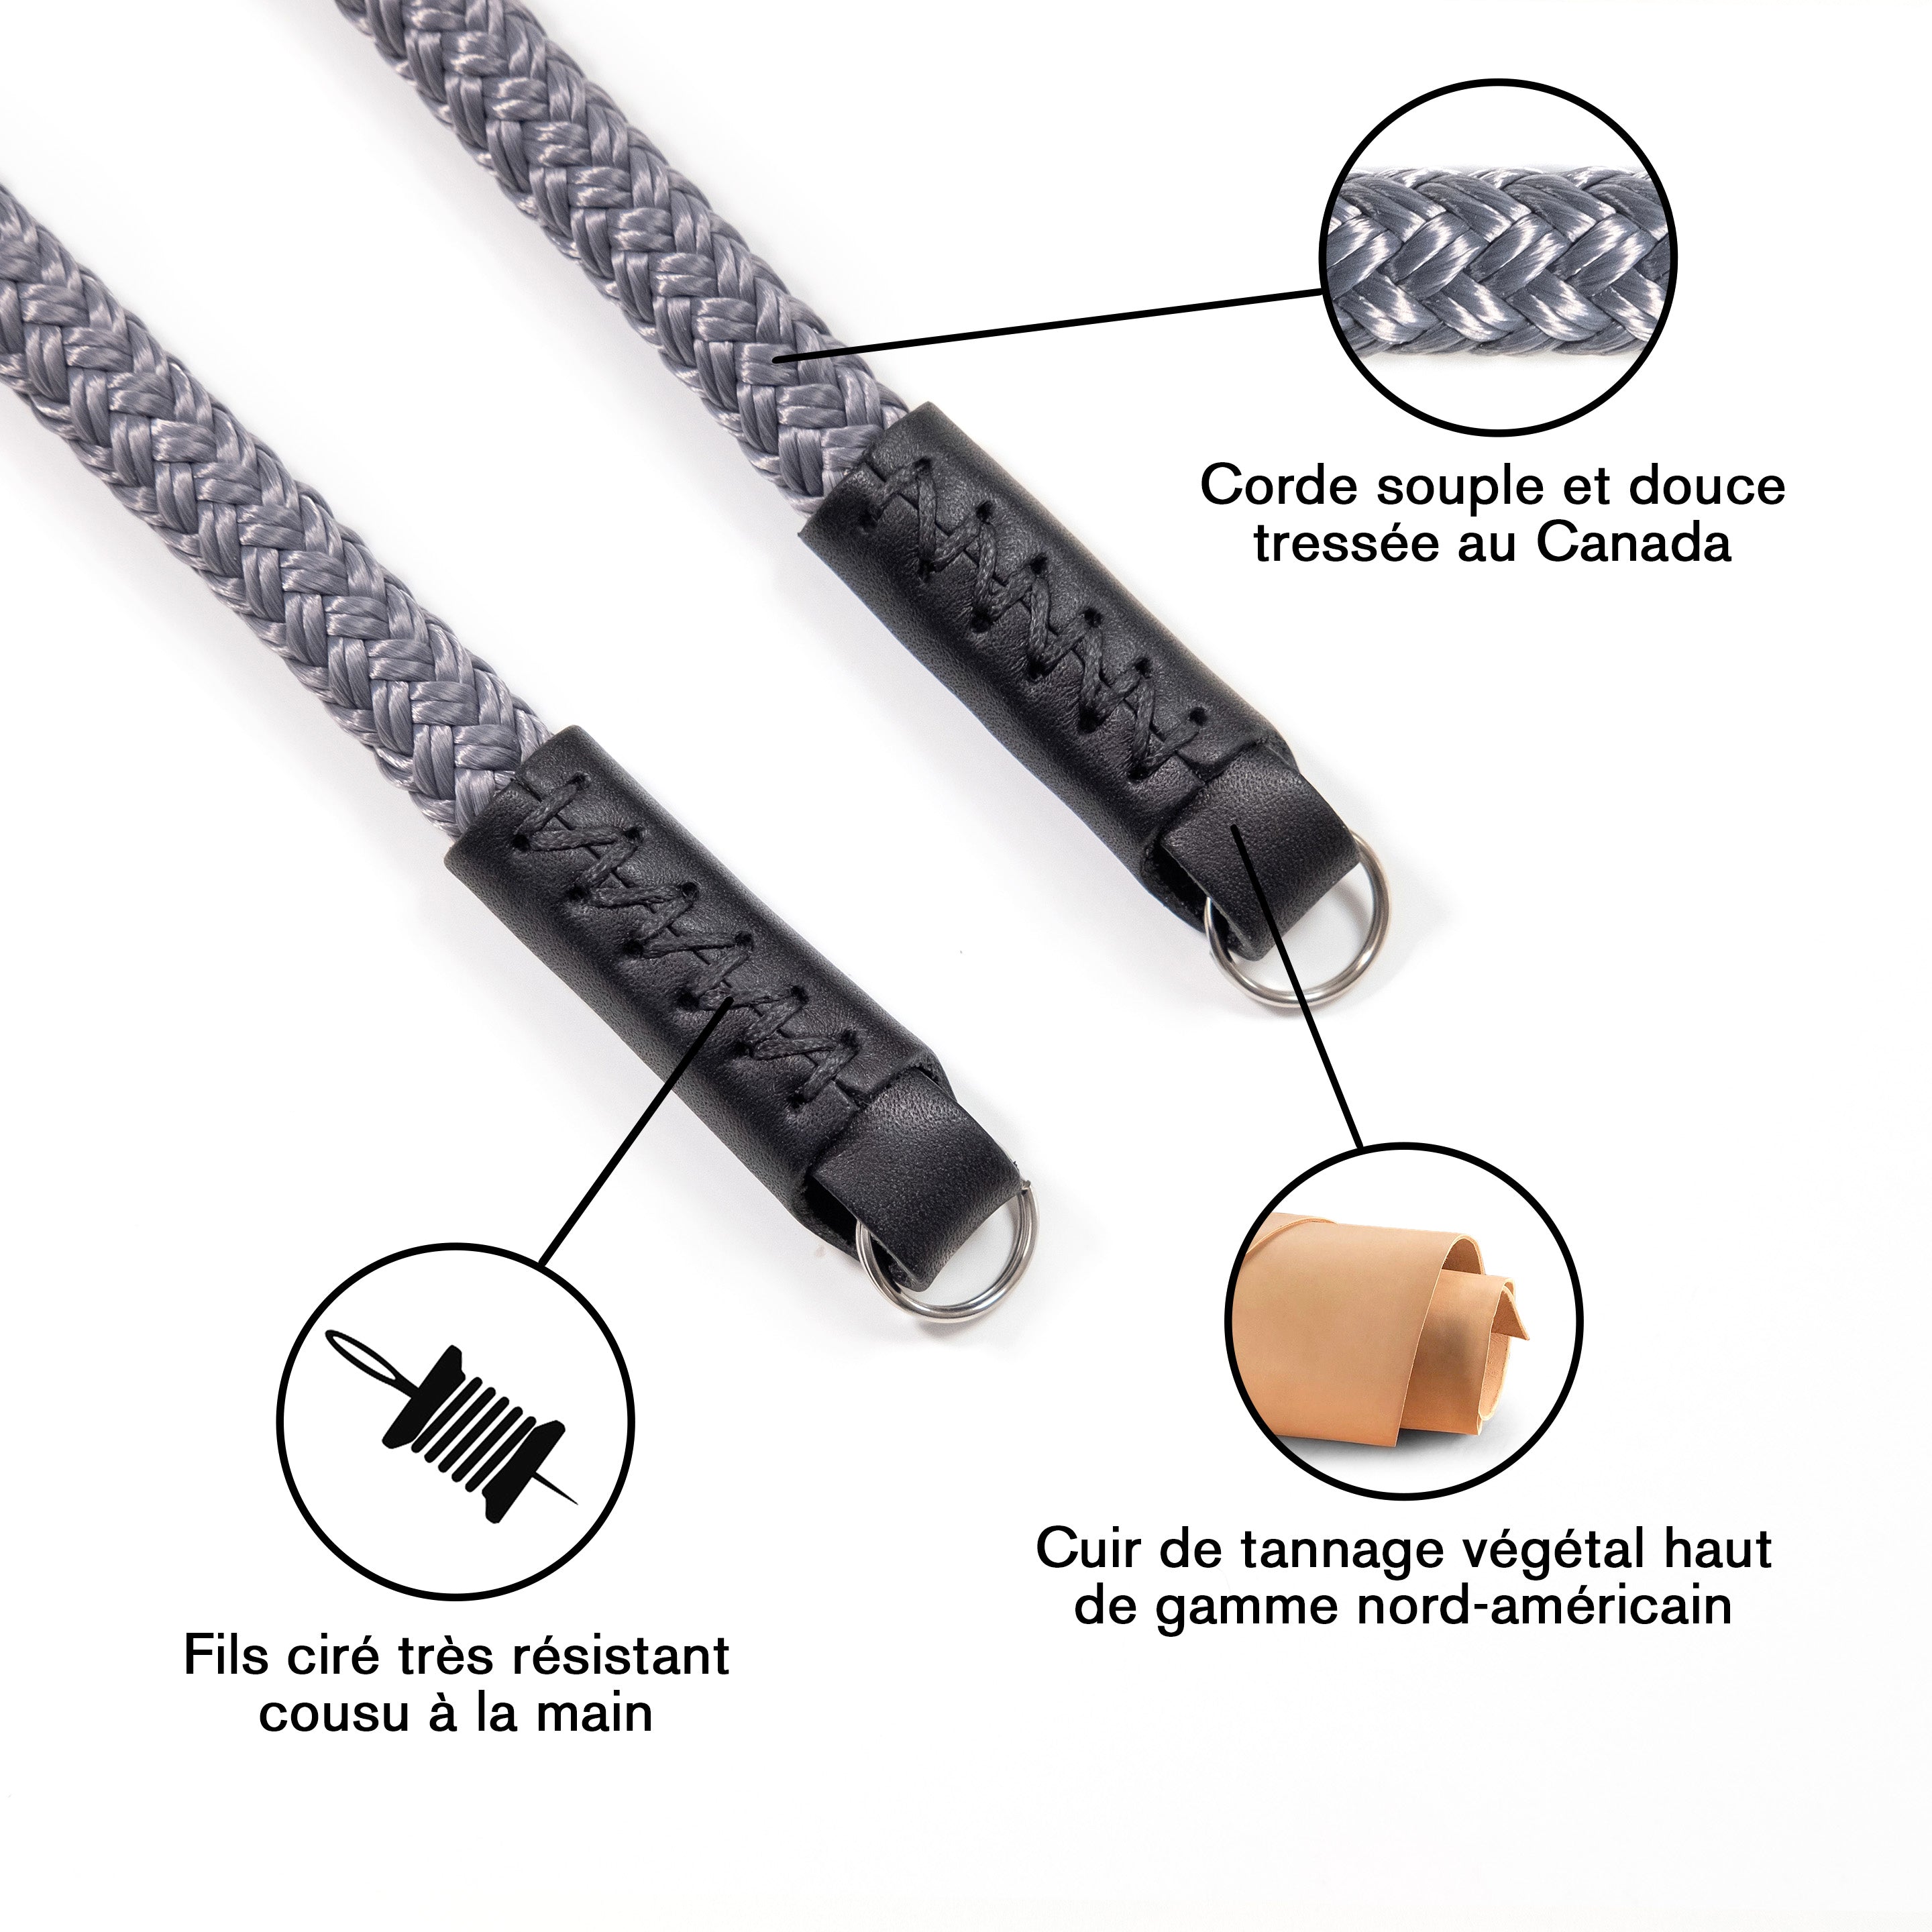 Fab' F8 strap - Grey rope, black leather - Size M-L (47")